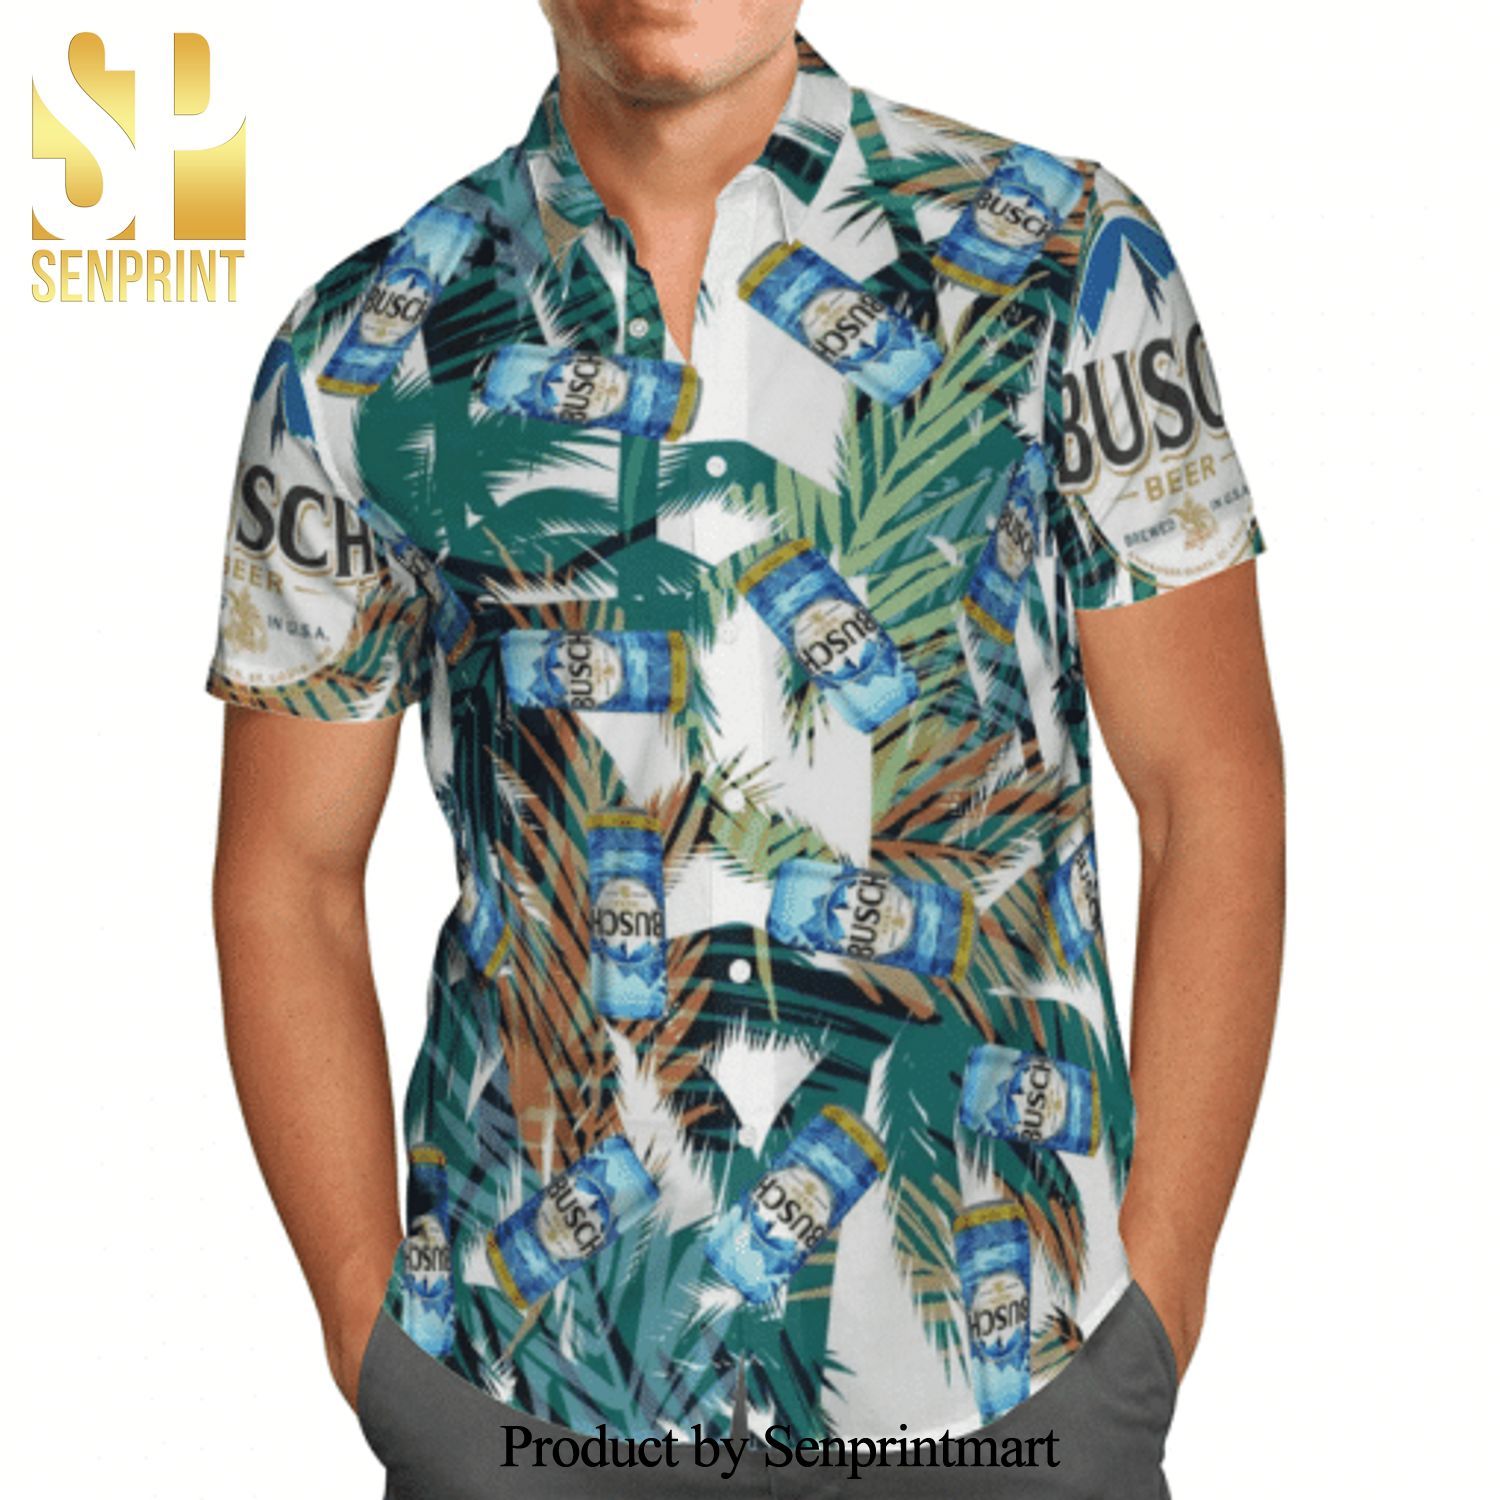 Busch Beer Palm Tree Full Printing Hawaiian Shirt